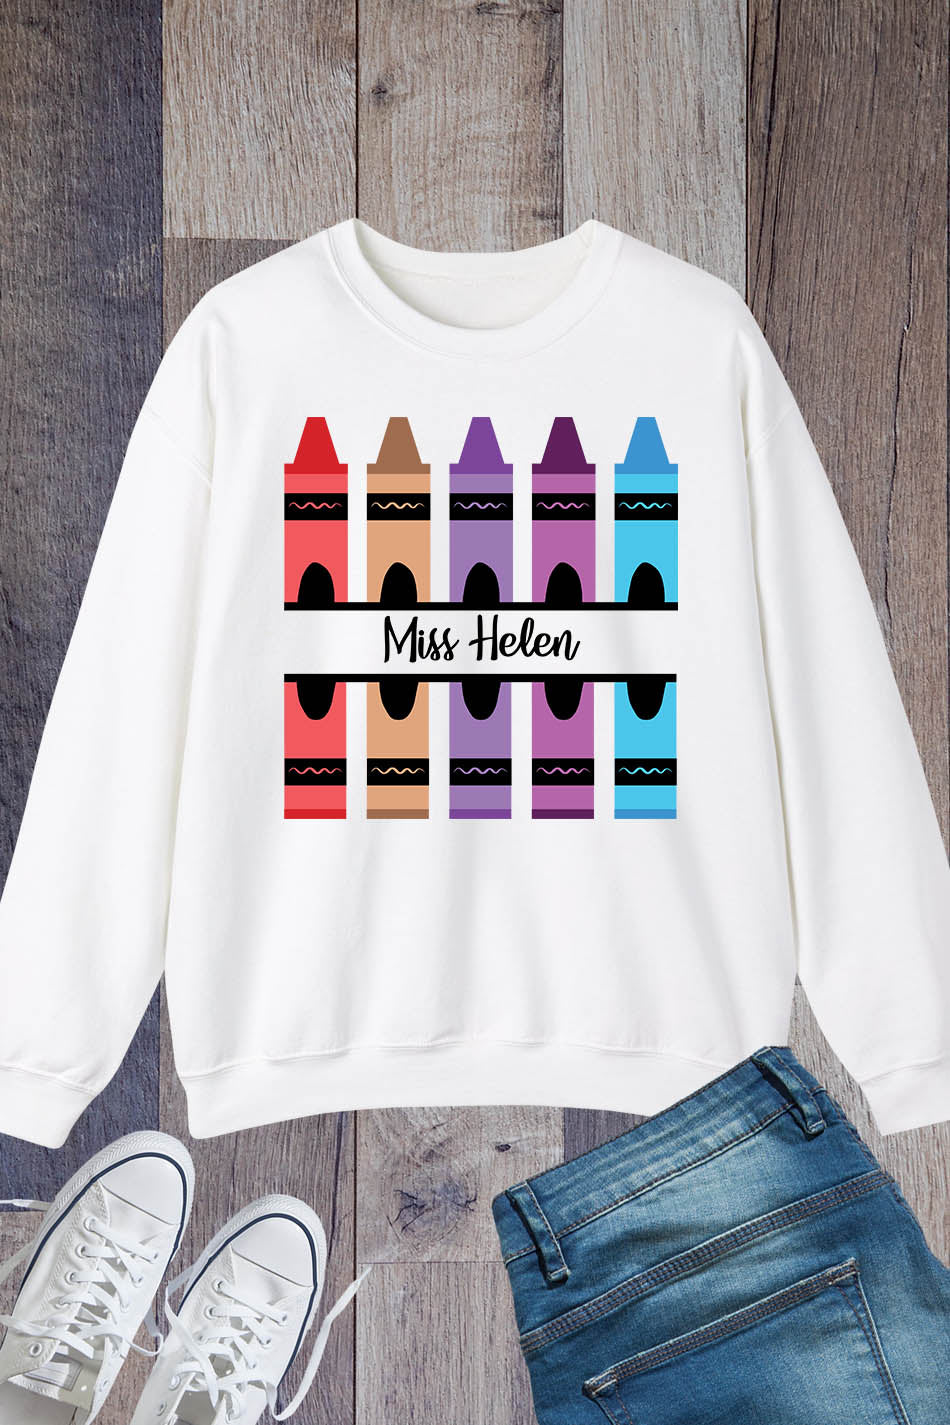 Customized Name Teacher Crayon Sweatshirt